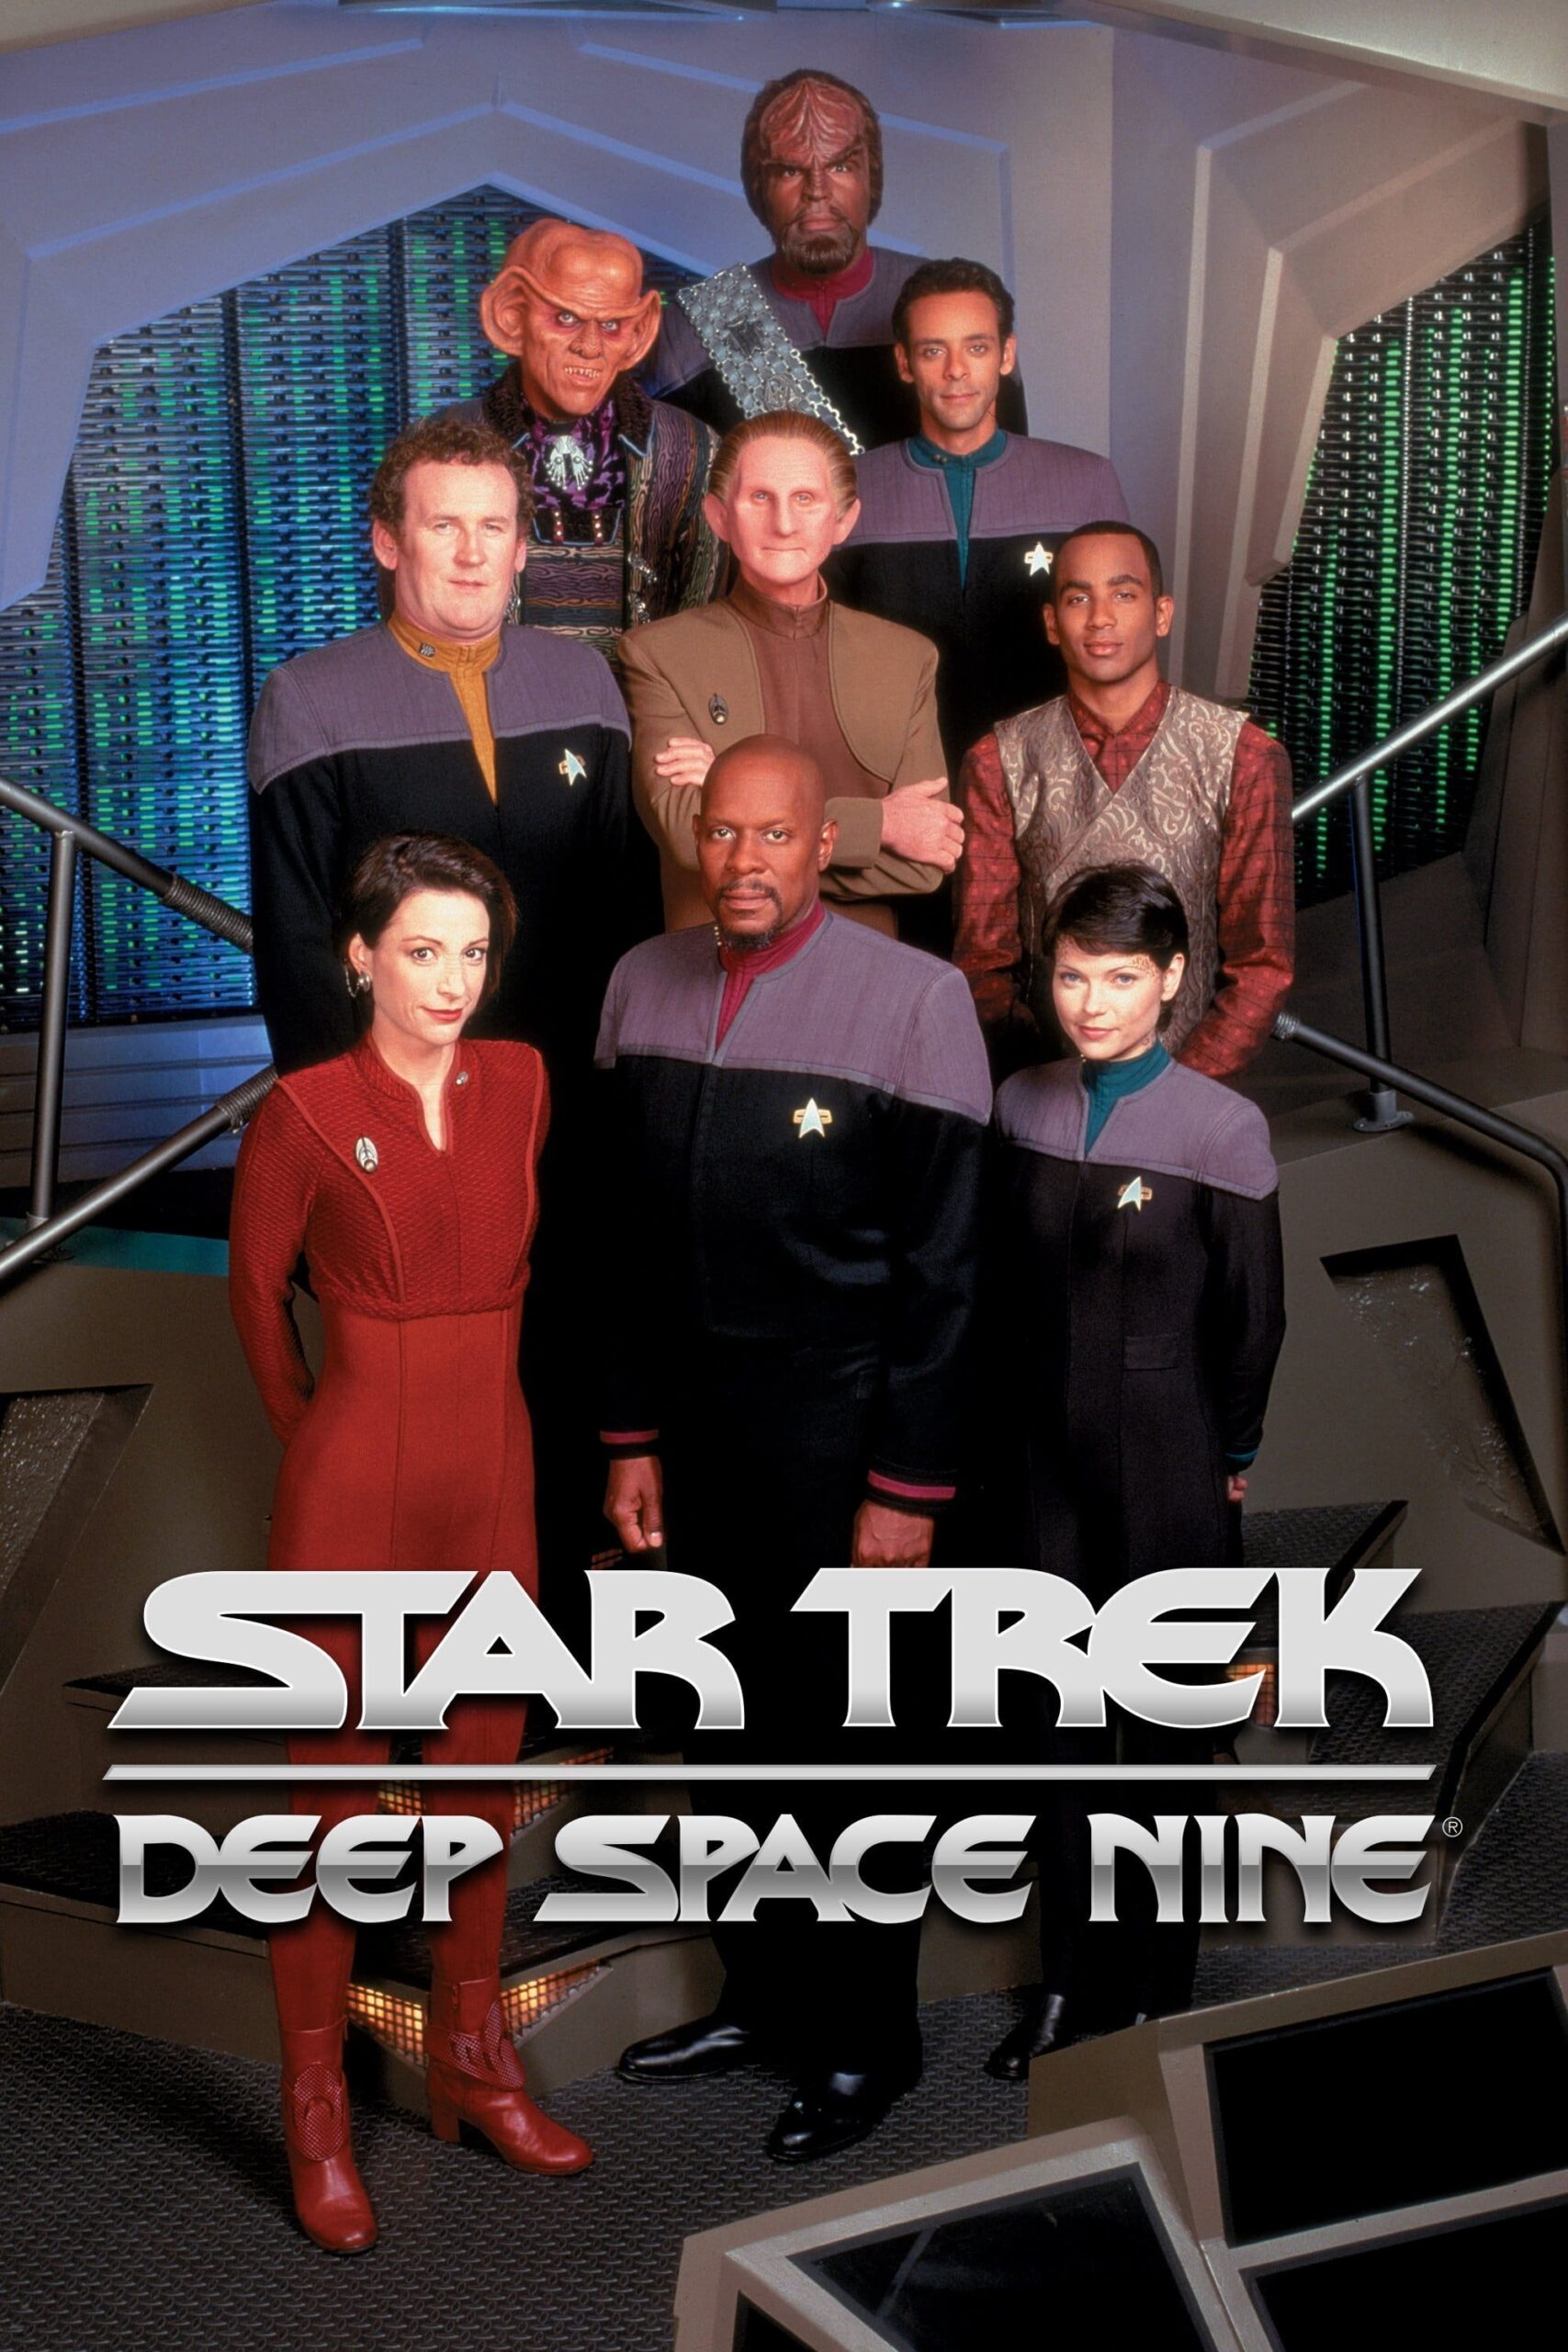 Plakát pro film “Star Trek: Hluboký vesmír devět”